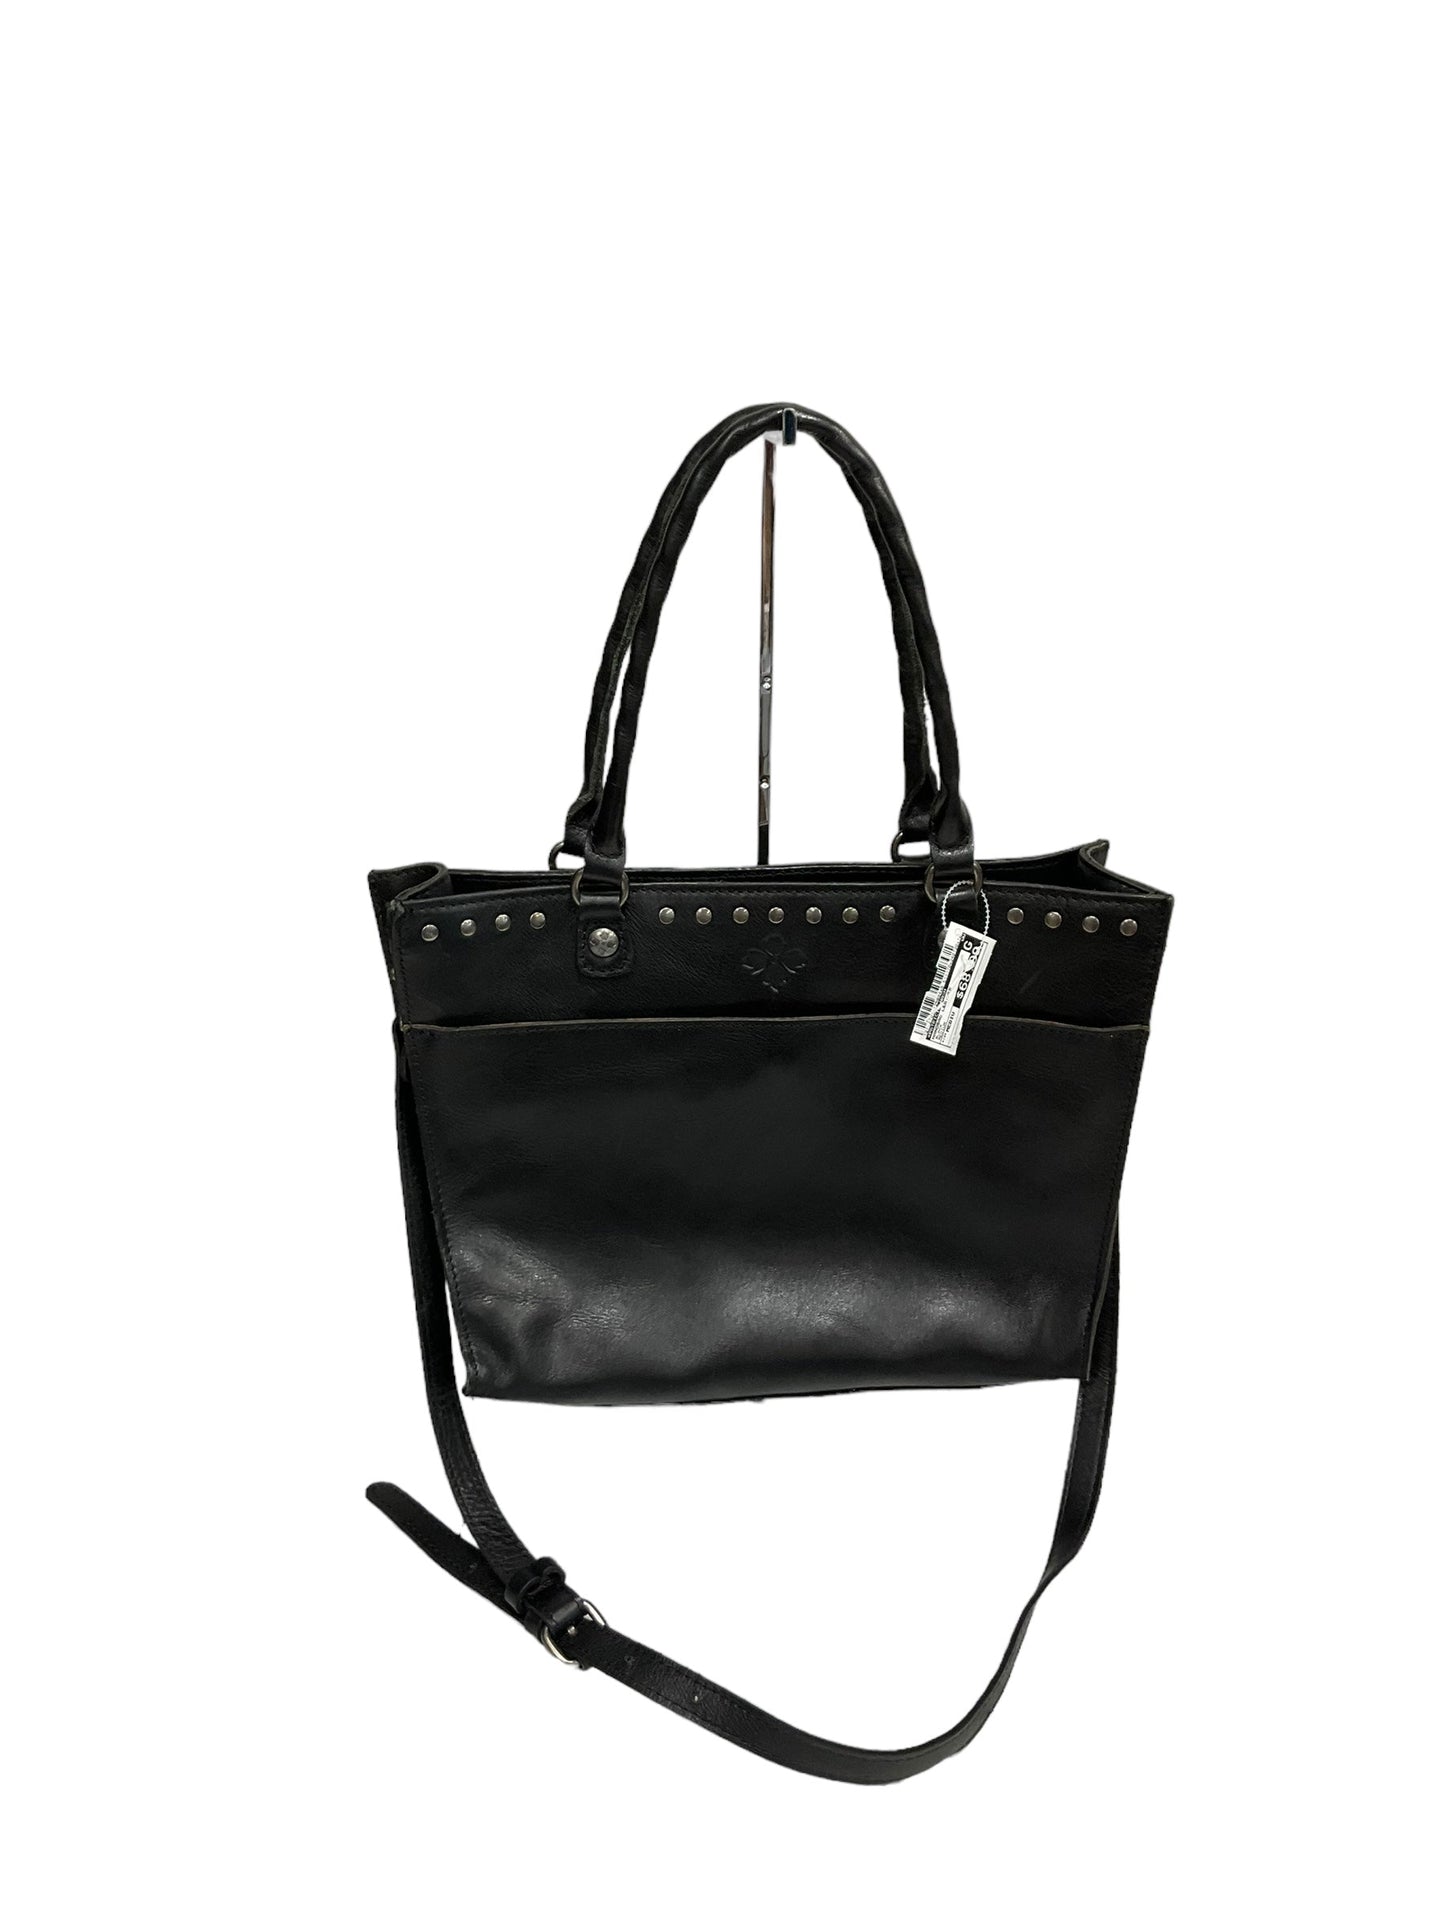 Handbag Leather Patricia Nash, Size Medium